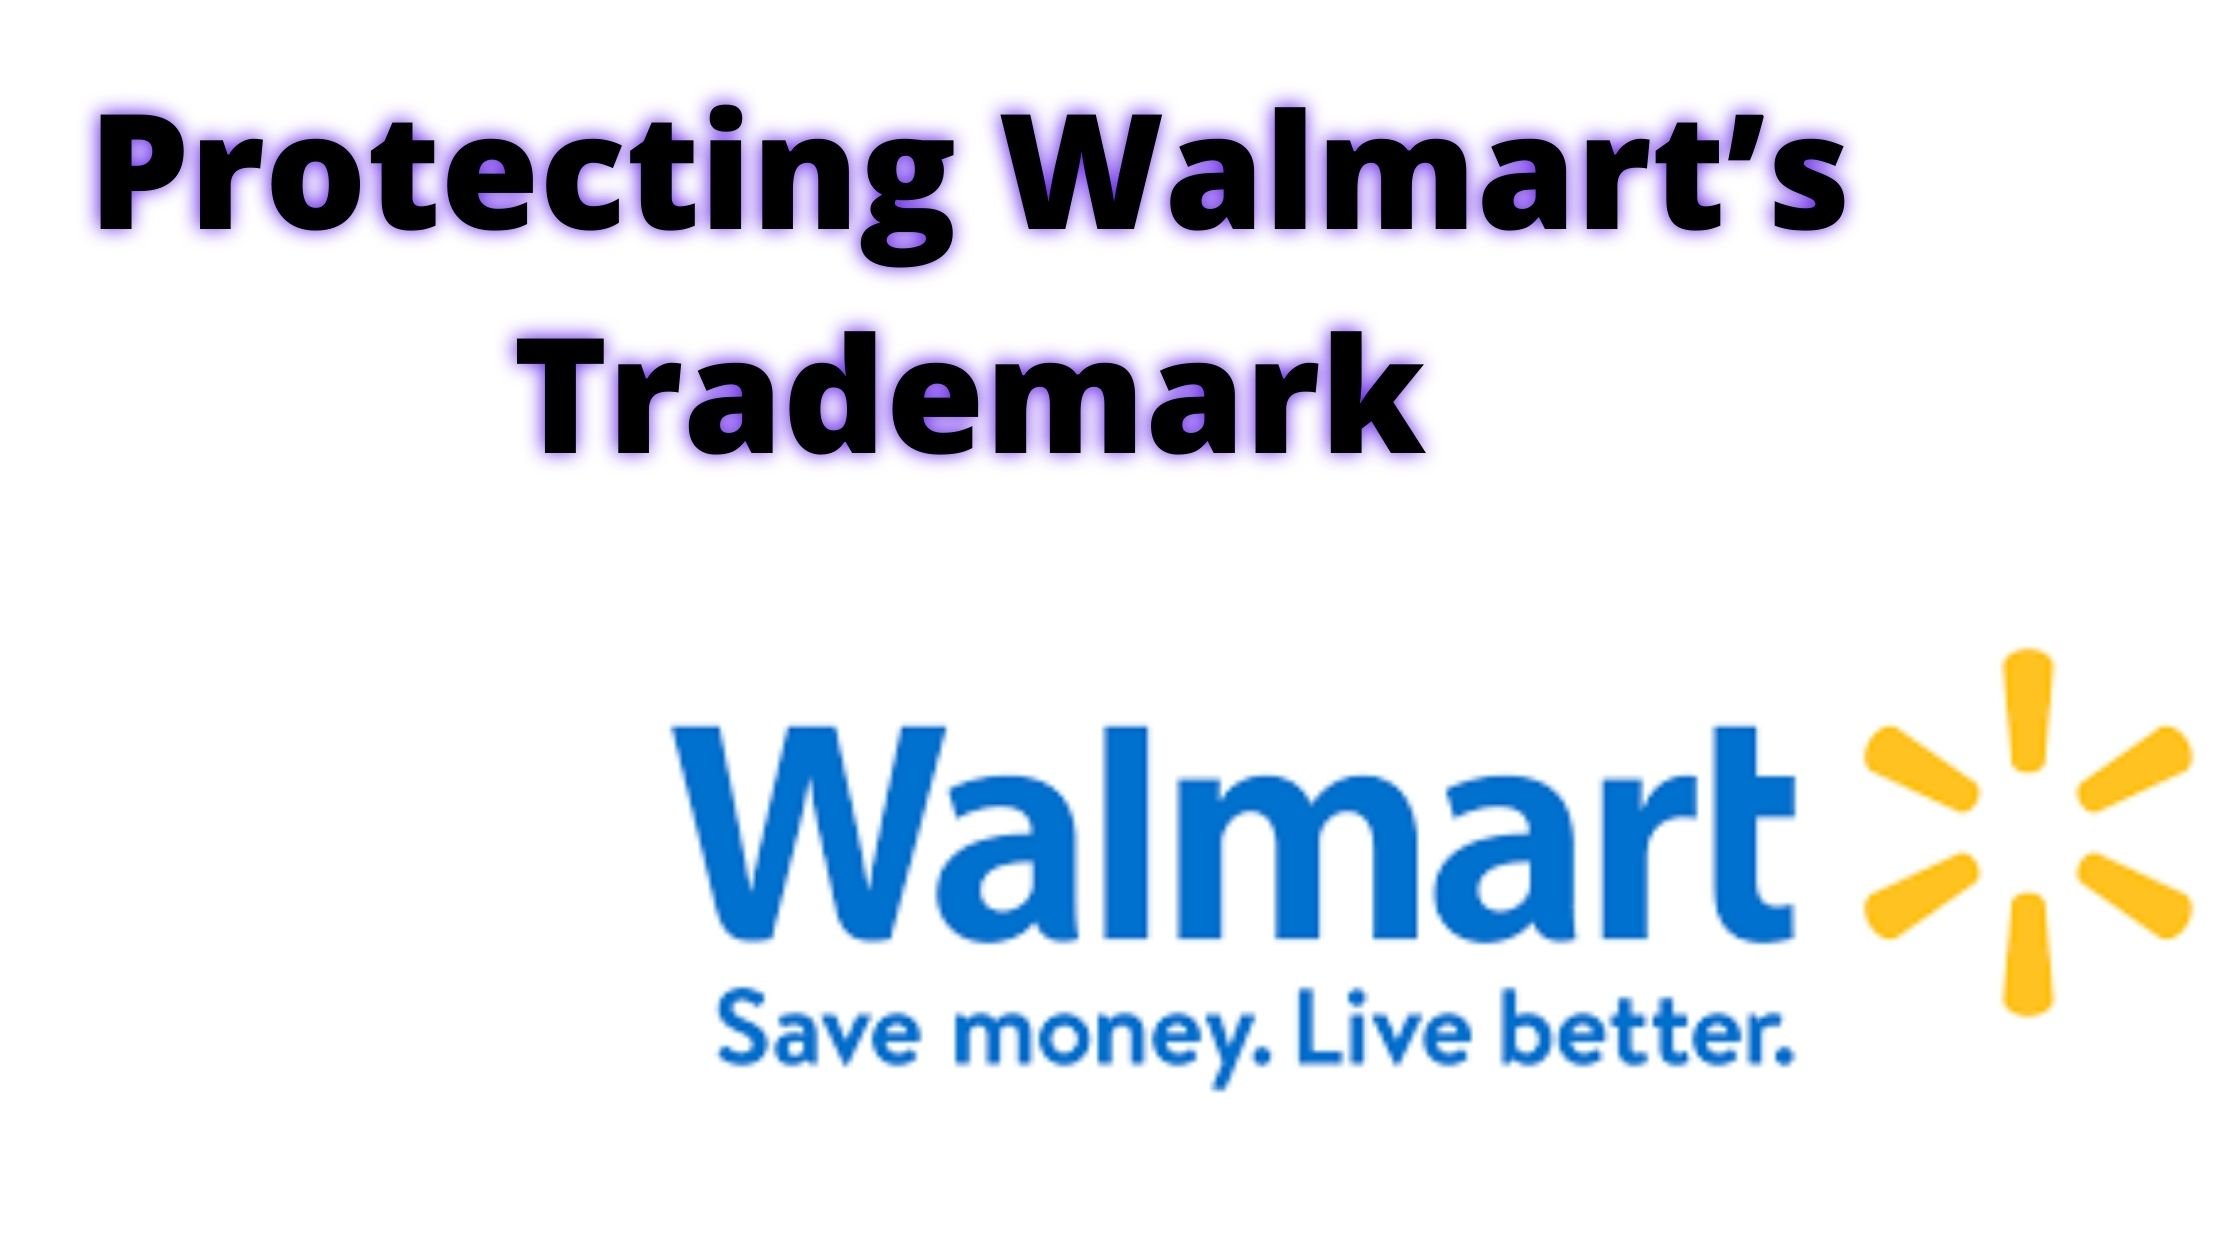 Protecting Walmart’s Trademark